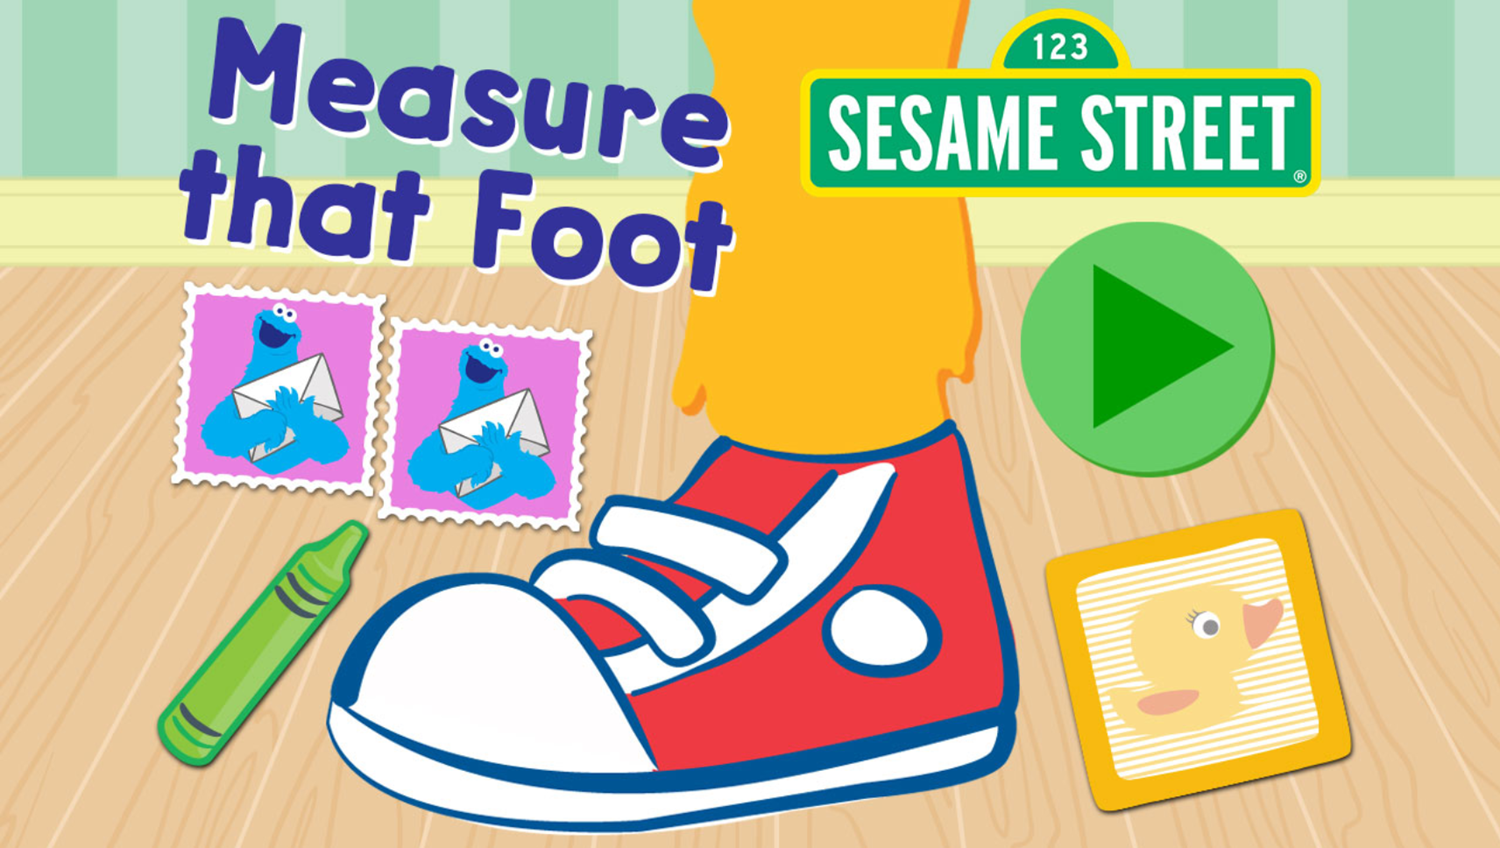 Sesame Street Measure That Foot Game Welcome Screen Screenshot.